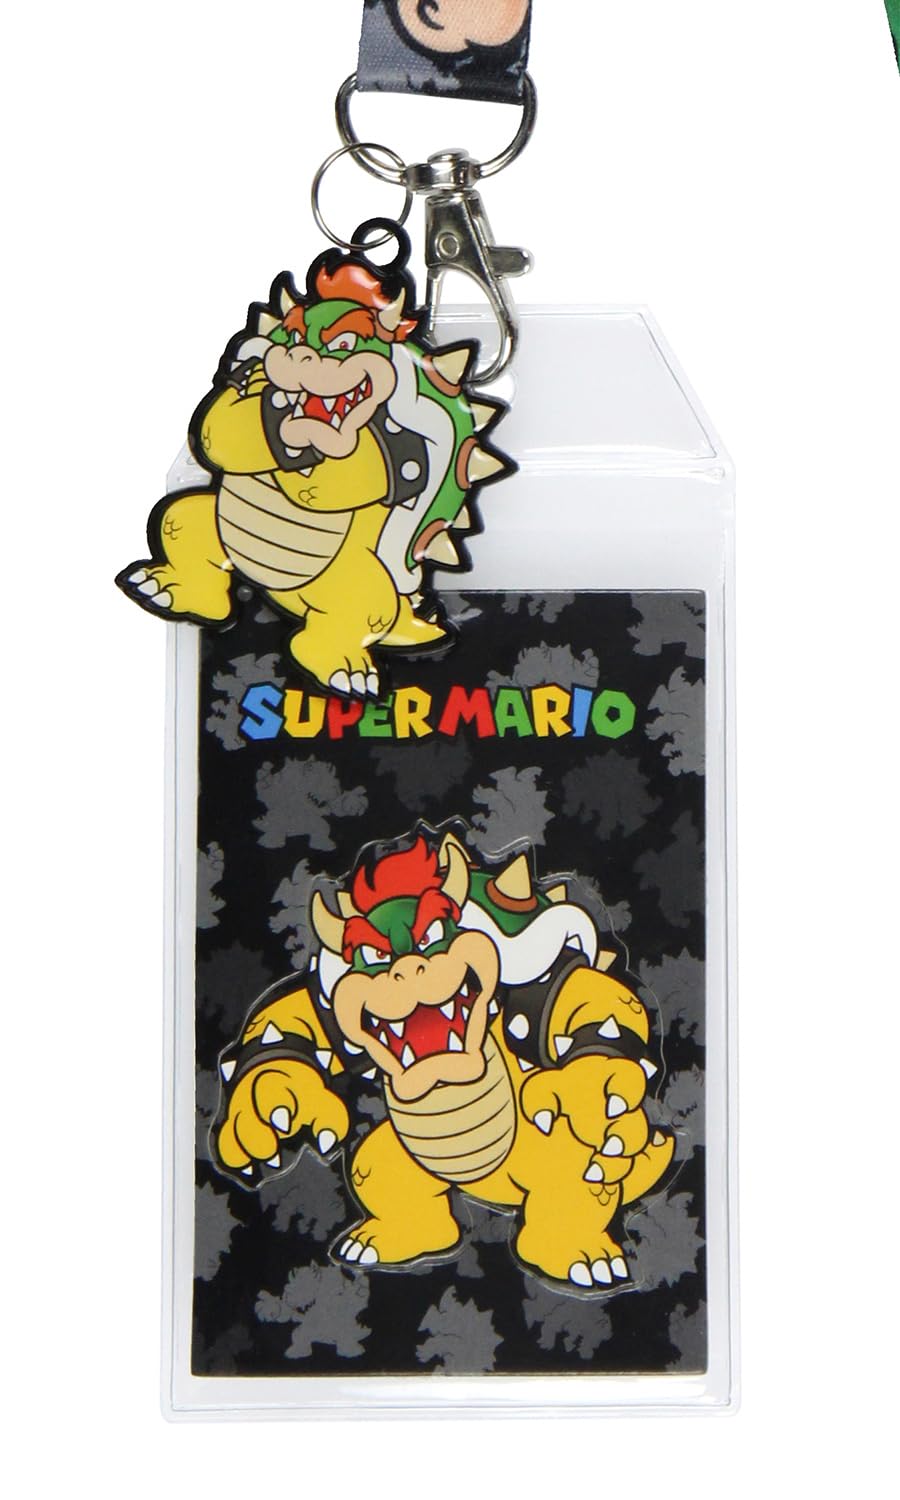 Nintendo Super Mario Bowser Lanyard ID Badge Holder Lanyard w/Collectible Sticker and 2" Metal Charm Pendant